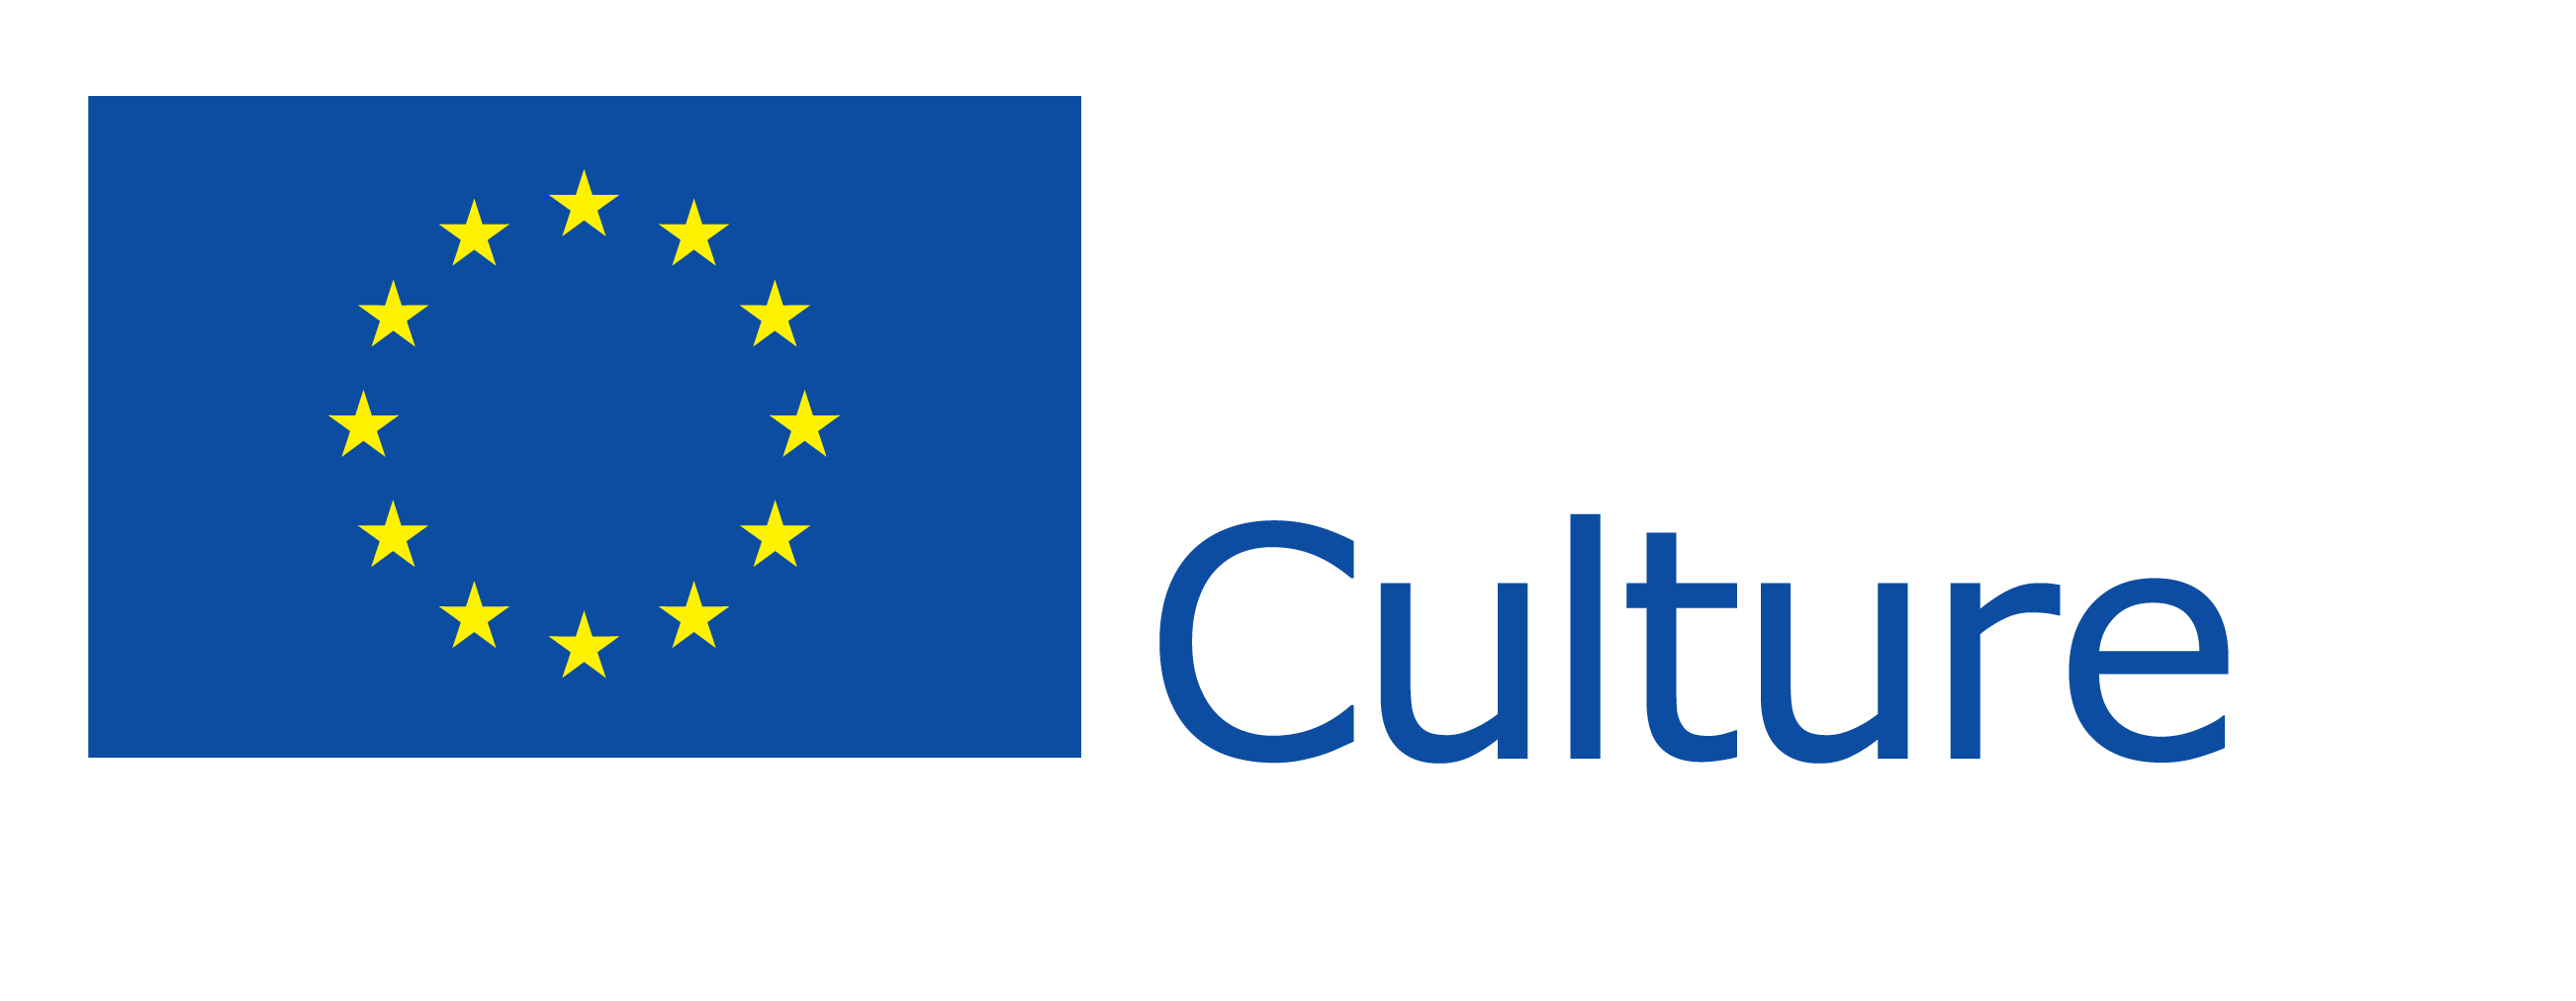 europe clipart culture european